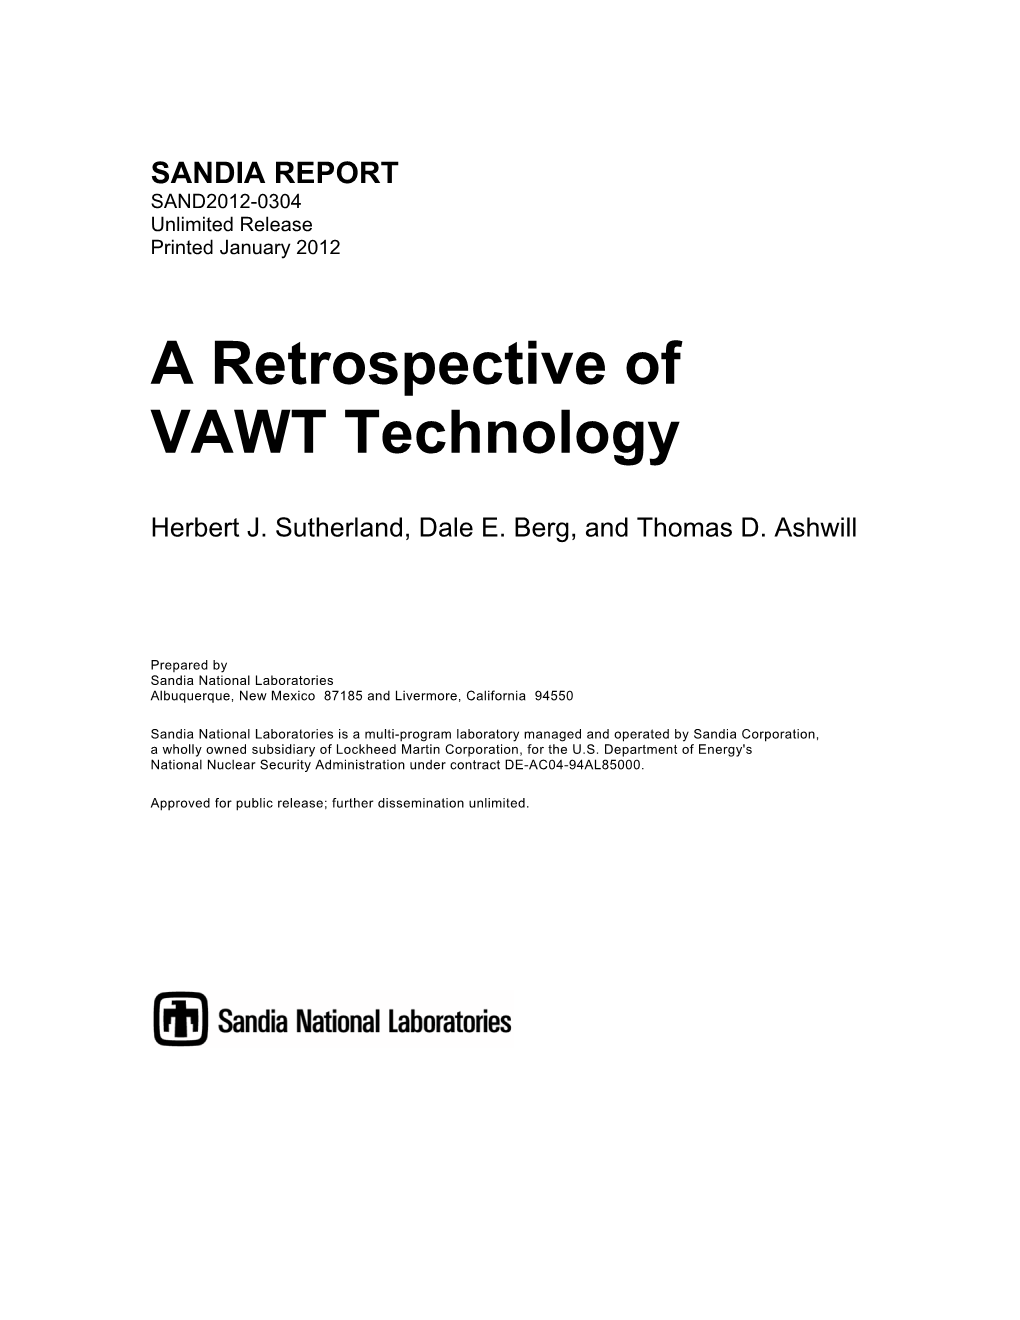 A Retrospective of VAWT Technology